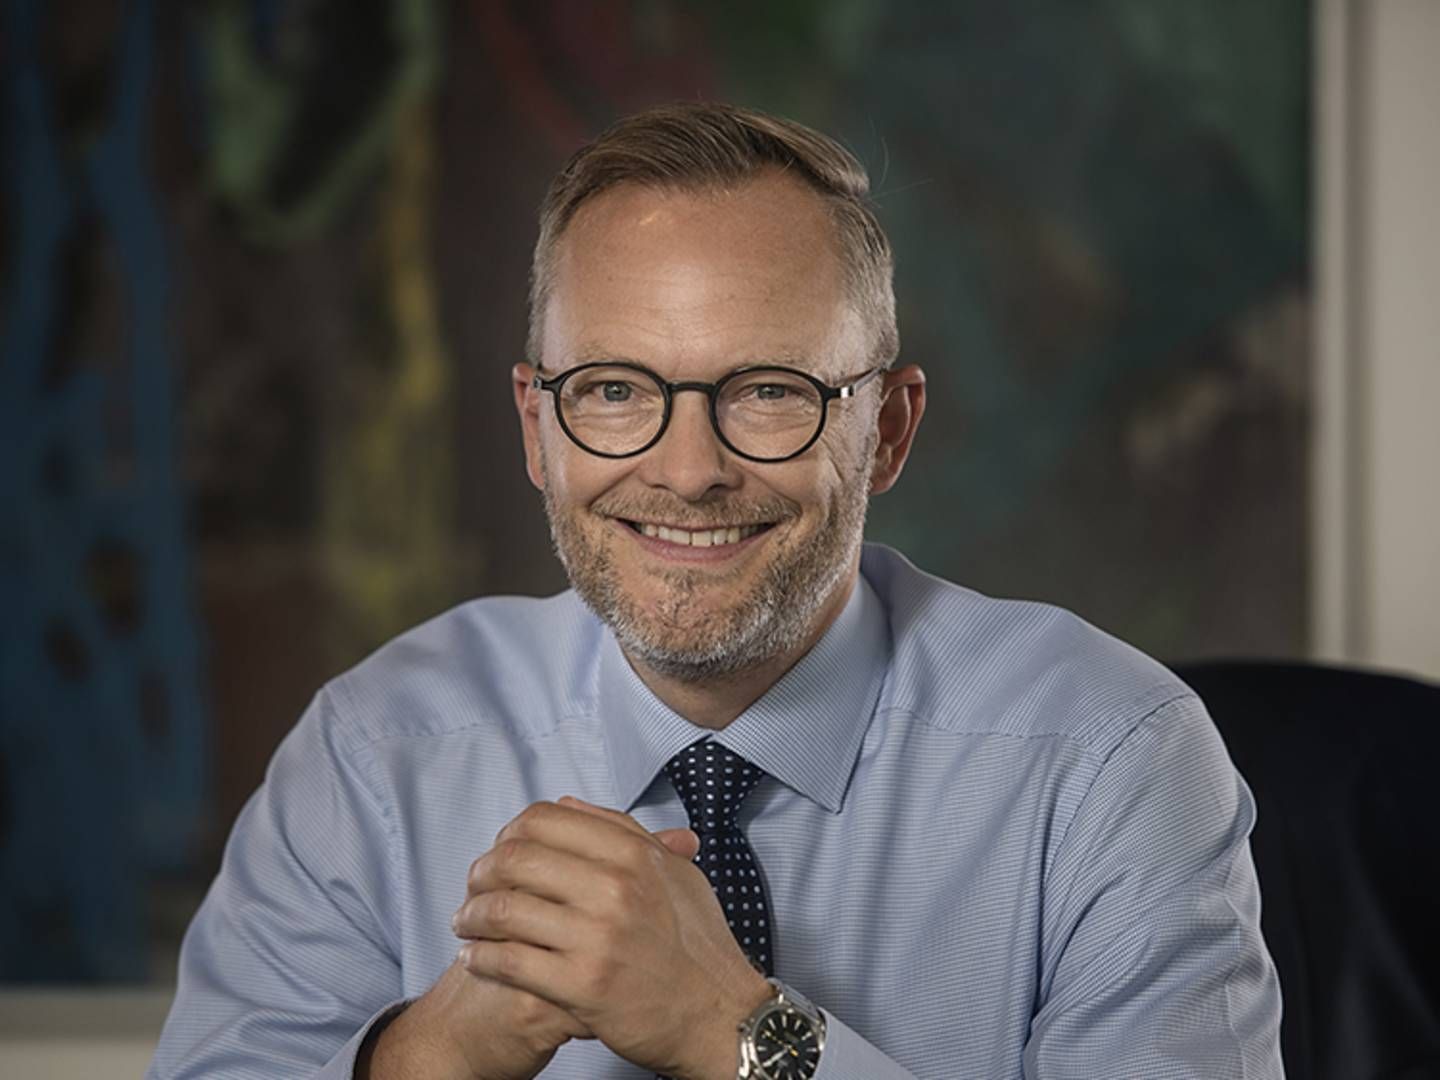 Direktør i Sparekassen Kronjylland, Klaus Skjødt, har lavere forventninger til 2022. | Foto: PR/Sparekassen Kronjylland